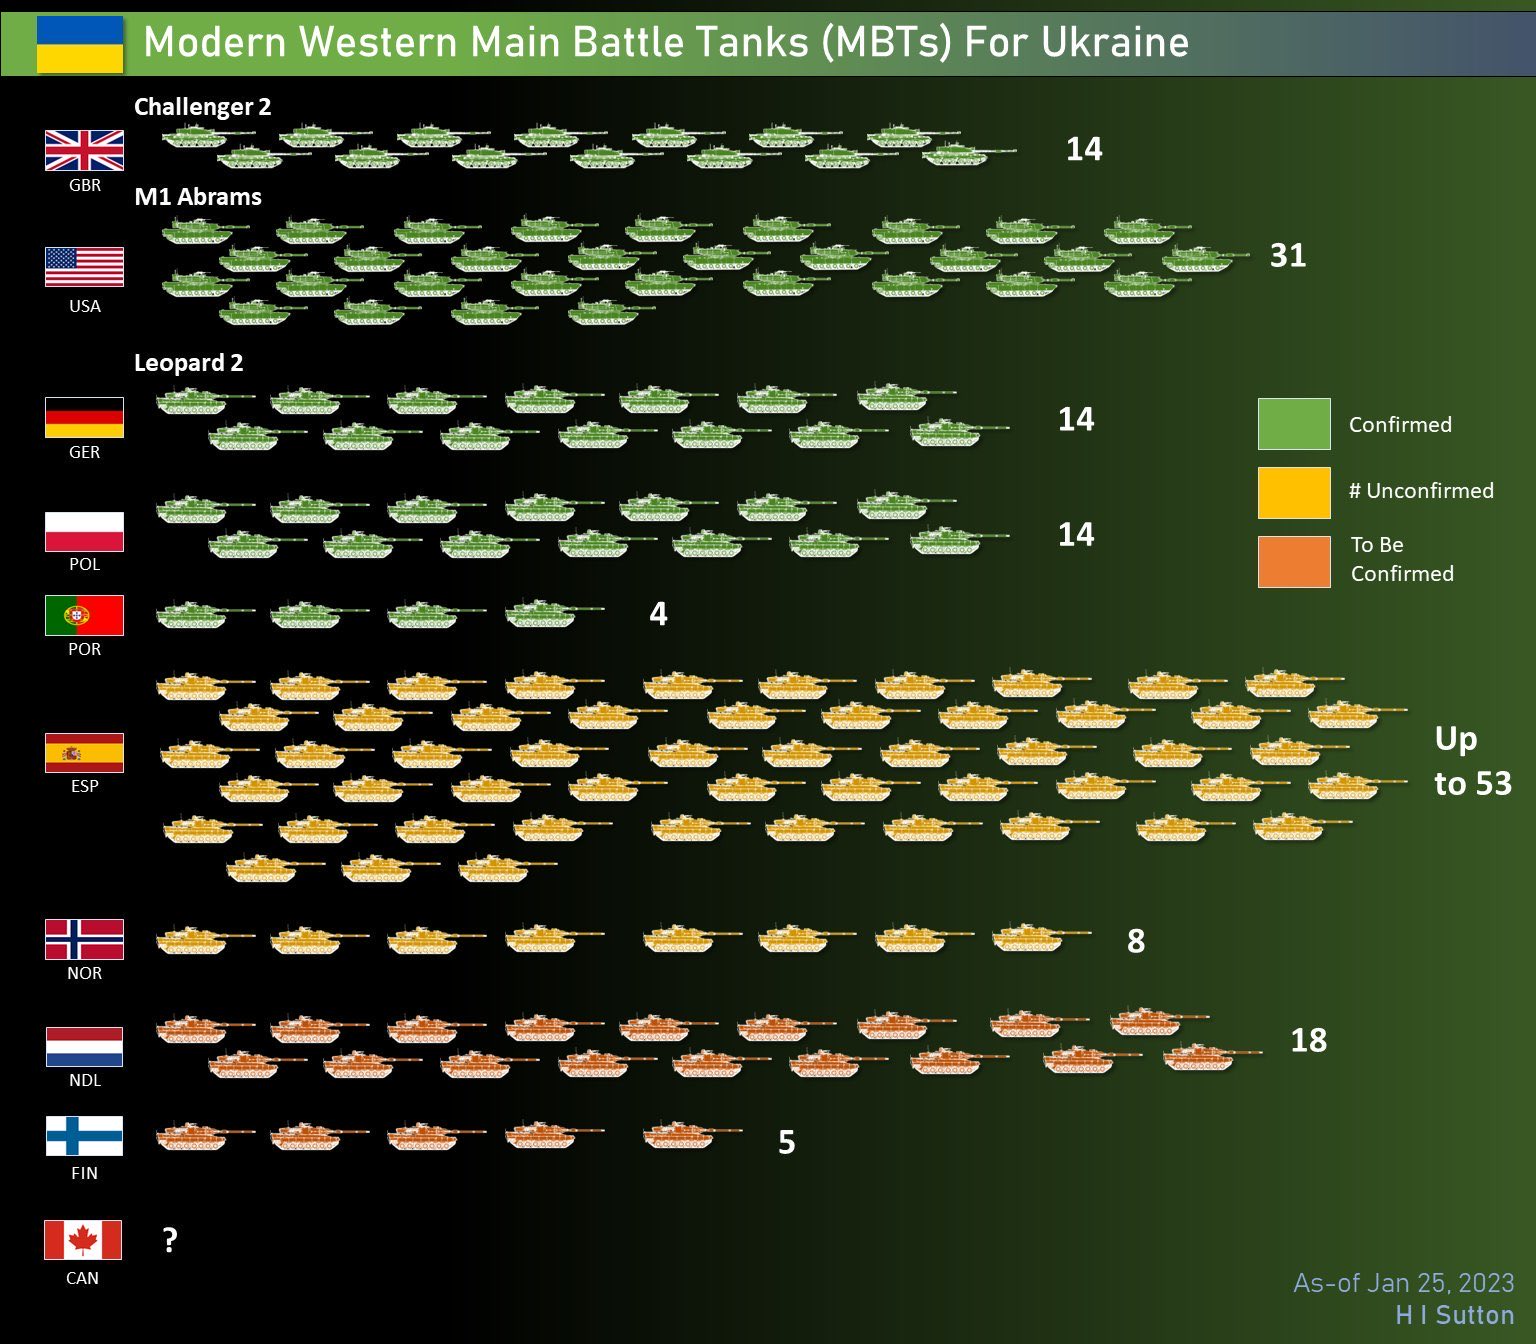 West Tanks for Ukraine